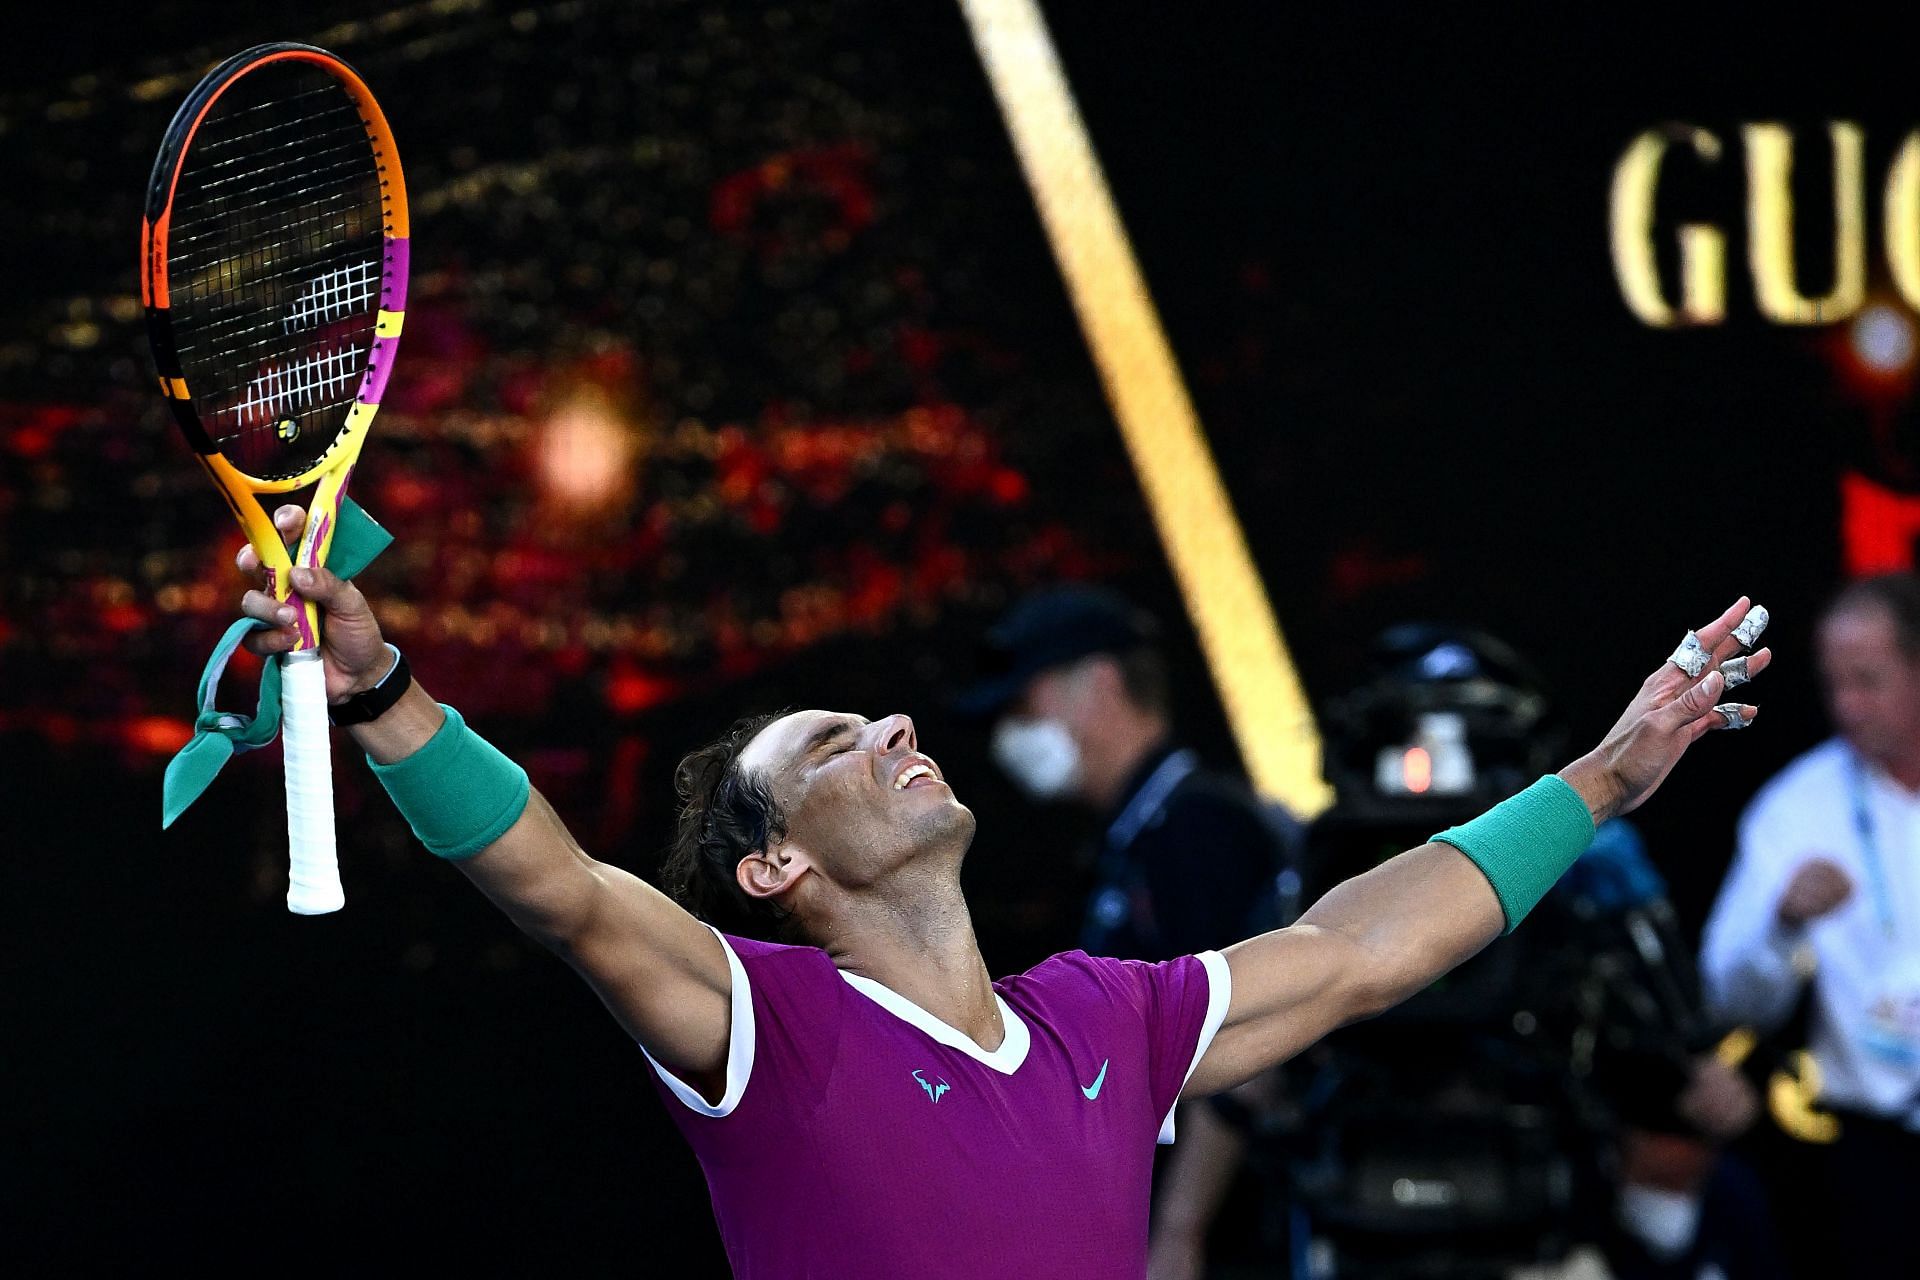 Rafael Nadal at the 2022 Australian Open